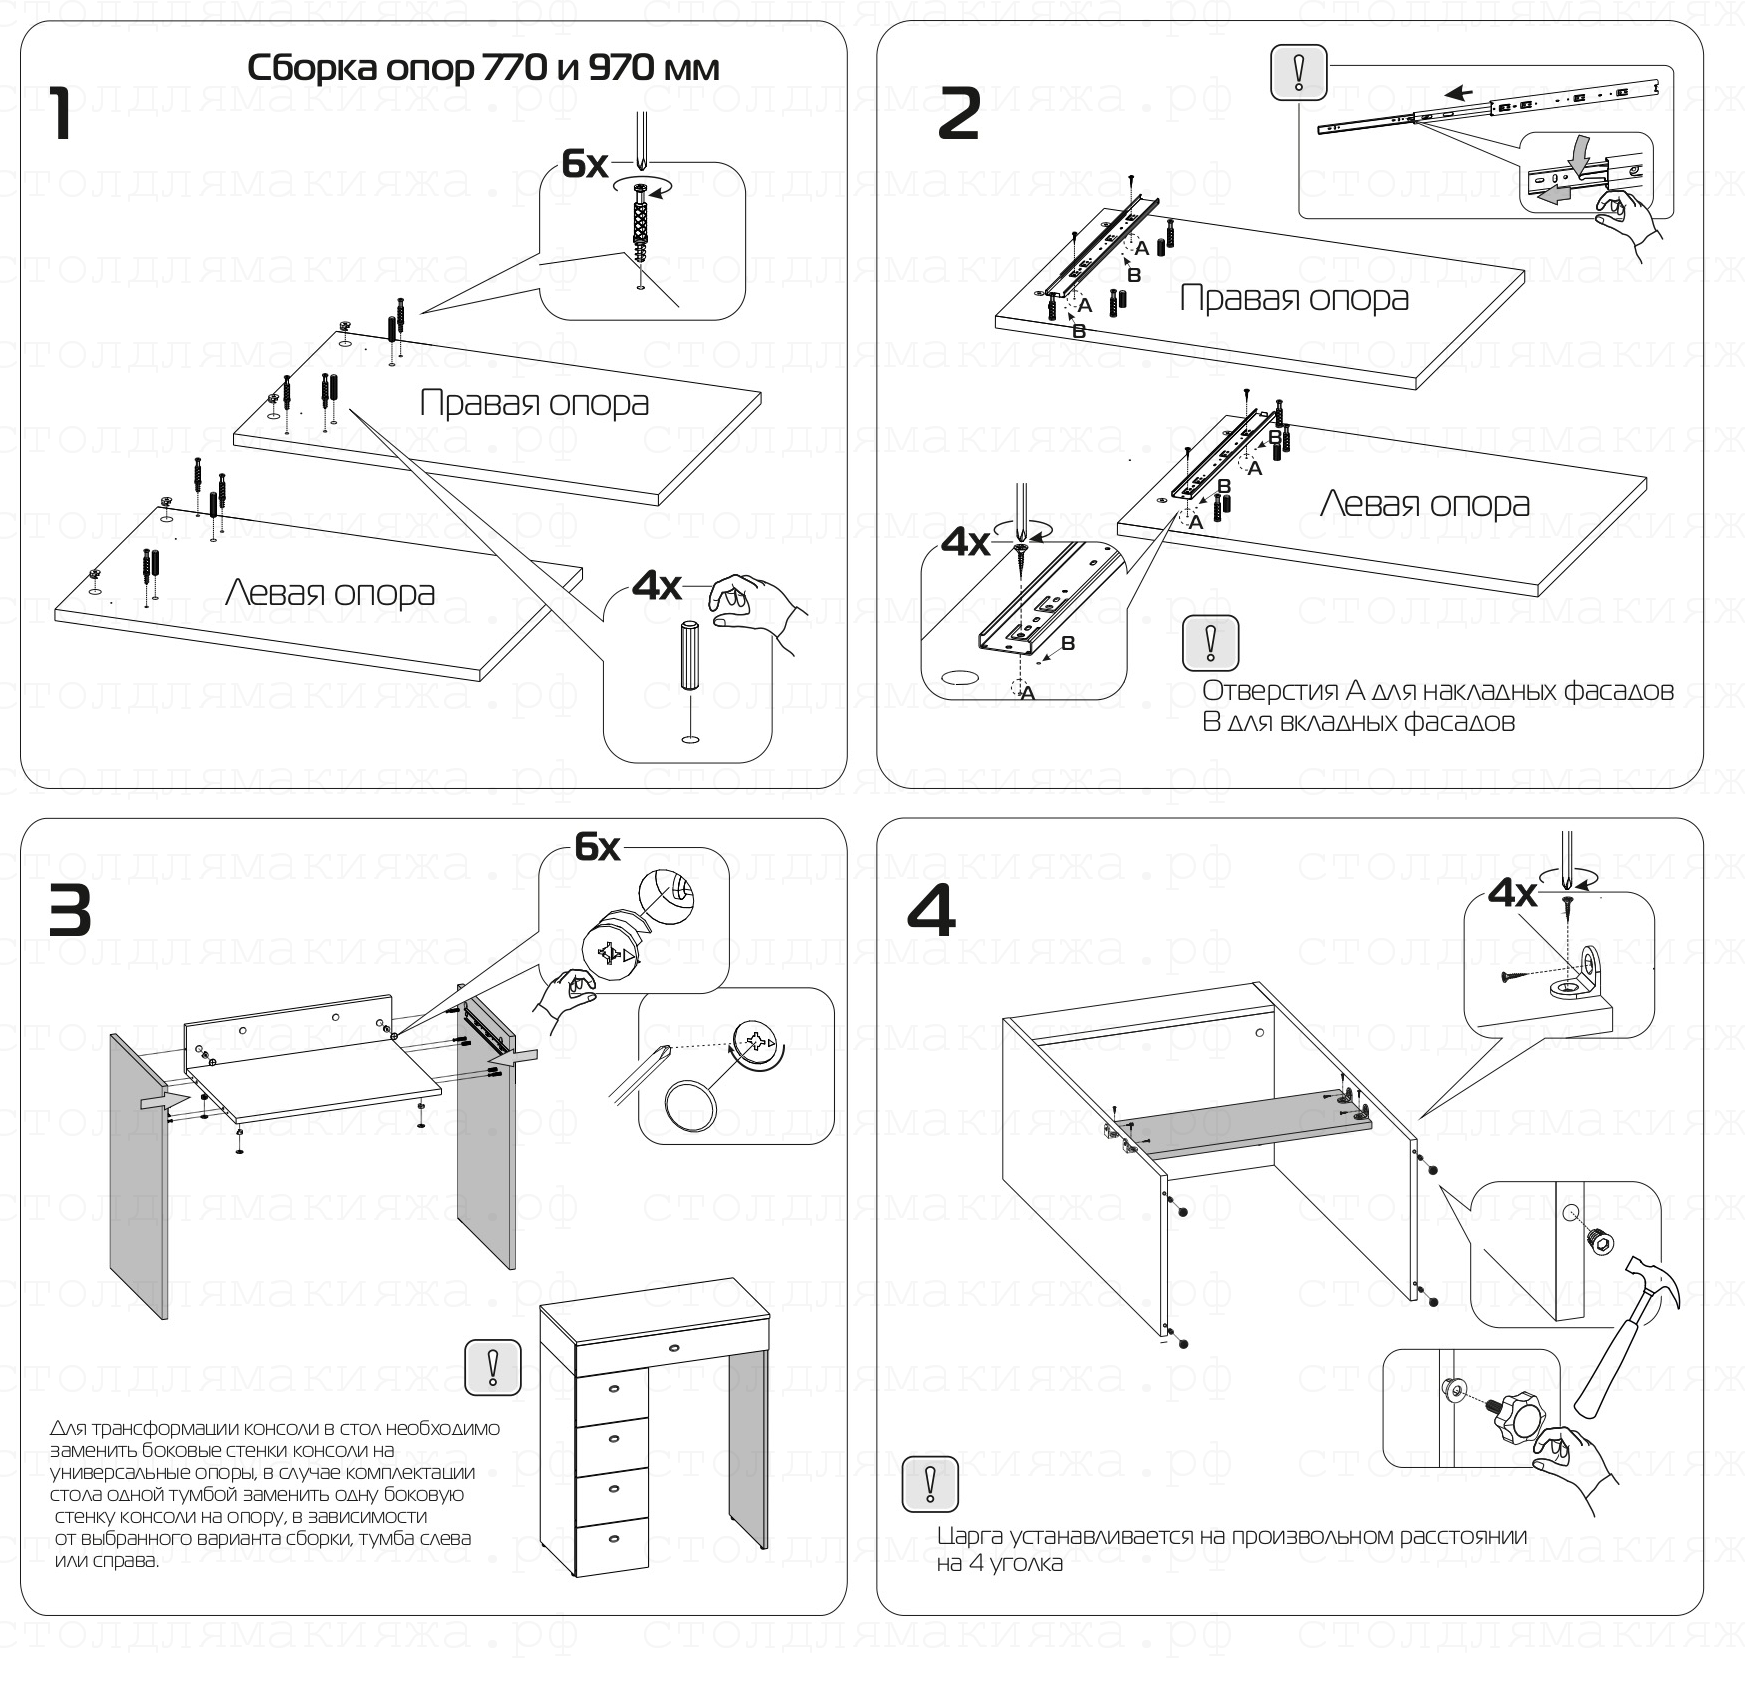 Схема сборки гримерного стола. Hemnes сборка инструкция. Сборка стола туалетного